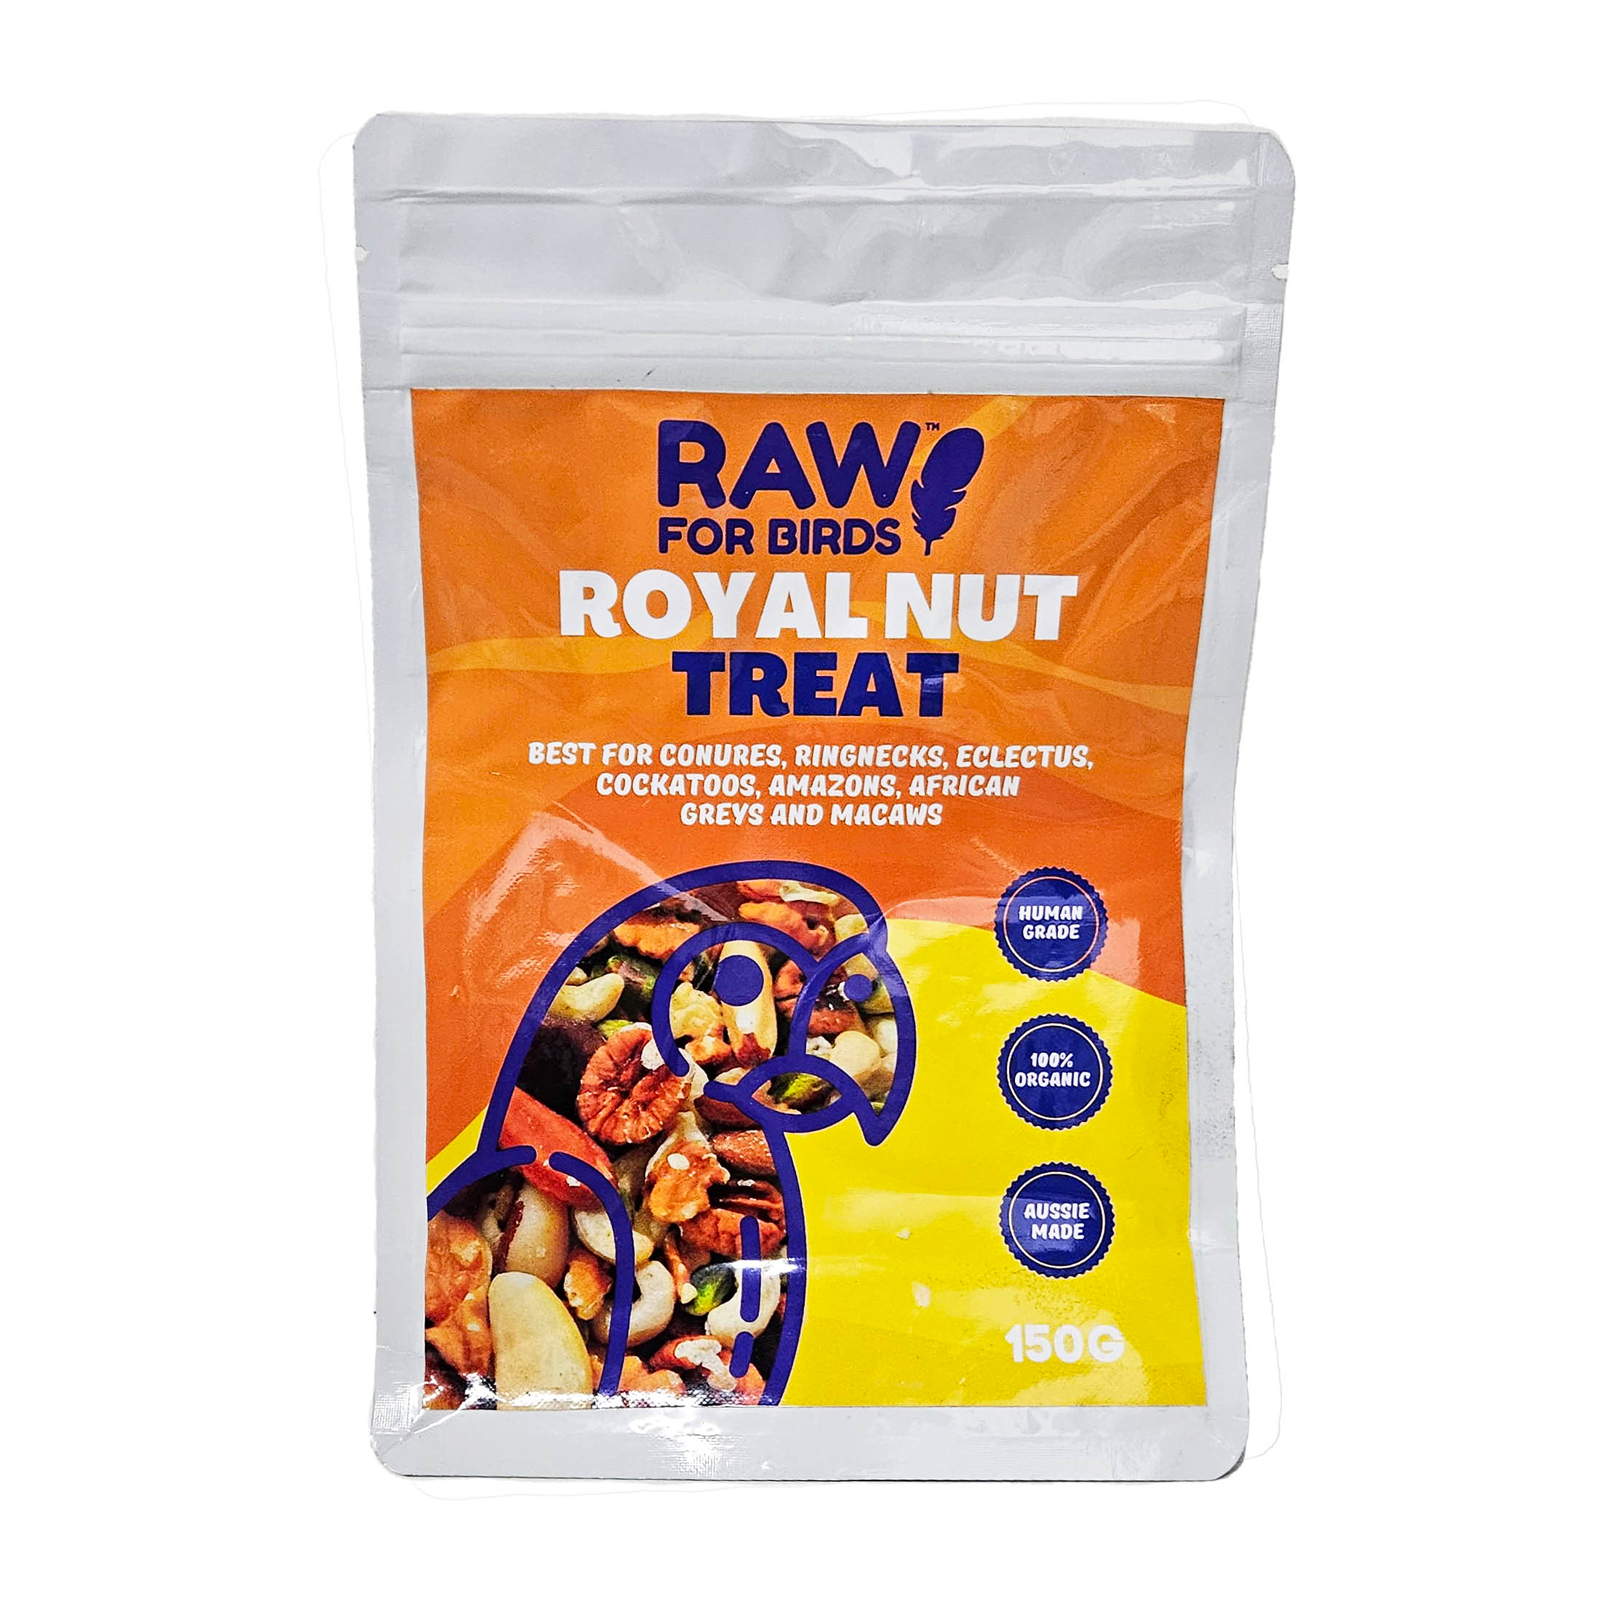 RAW for Birds Royal Nut Treat